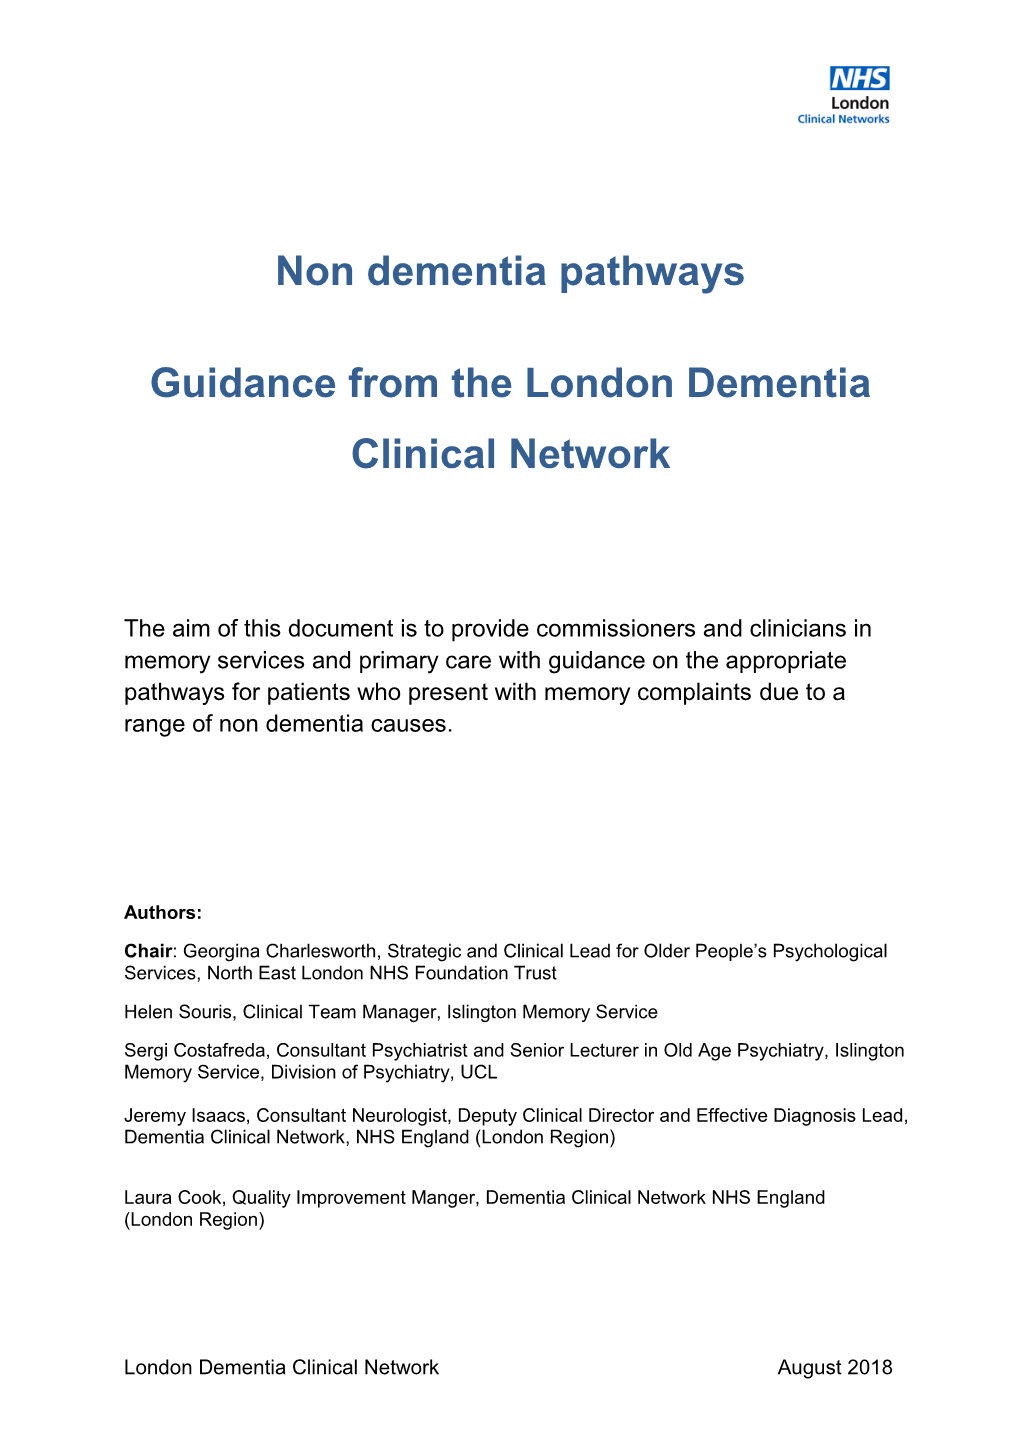 Non Dementia Pathways